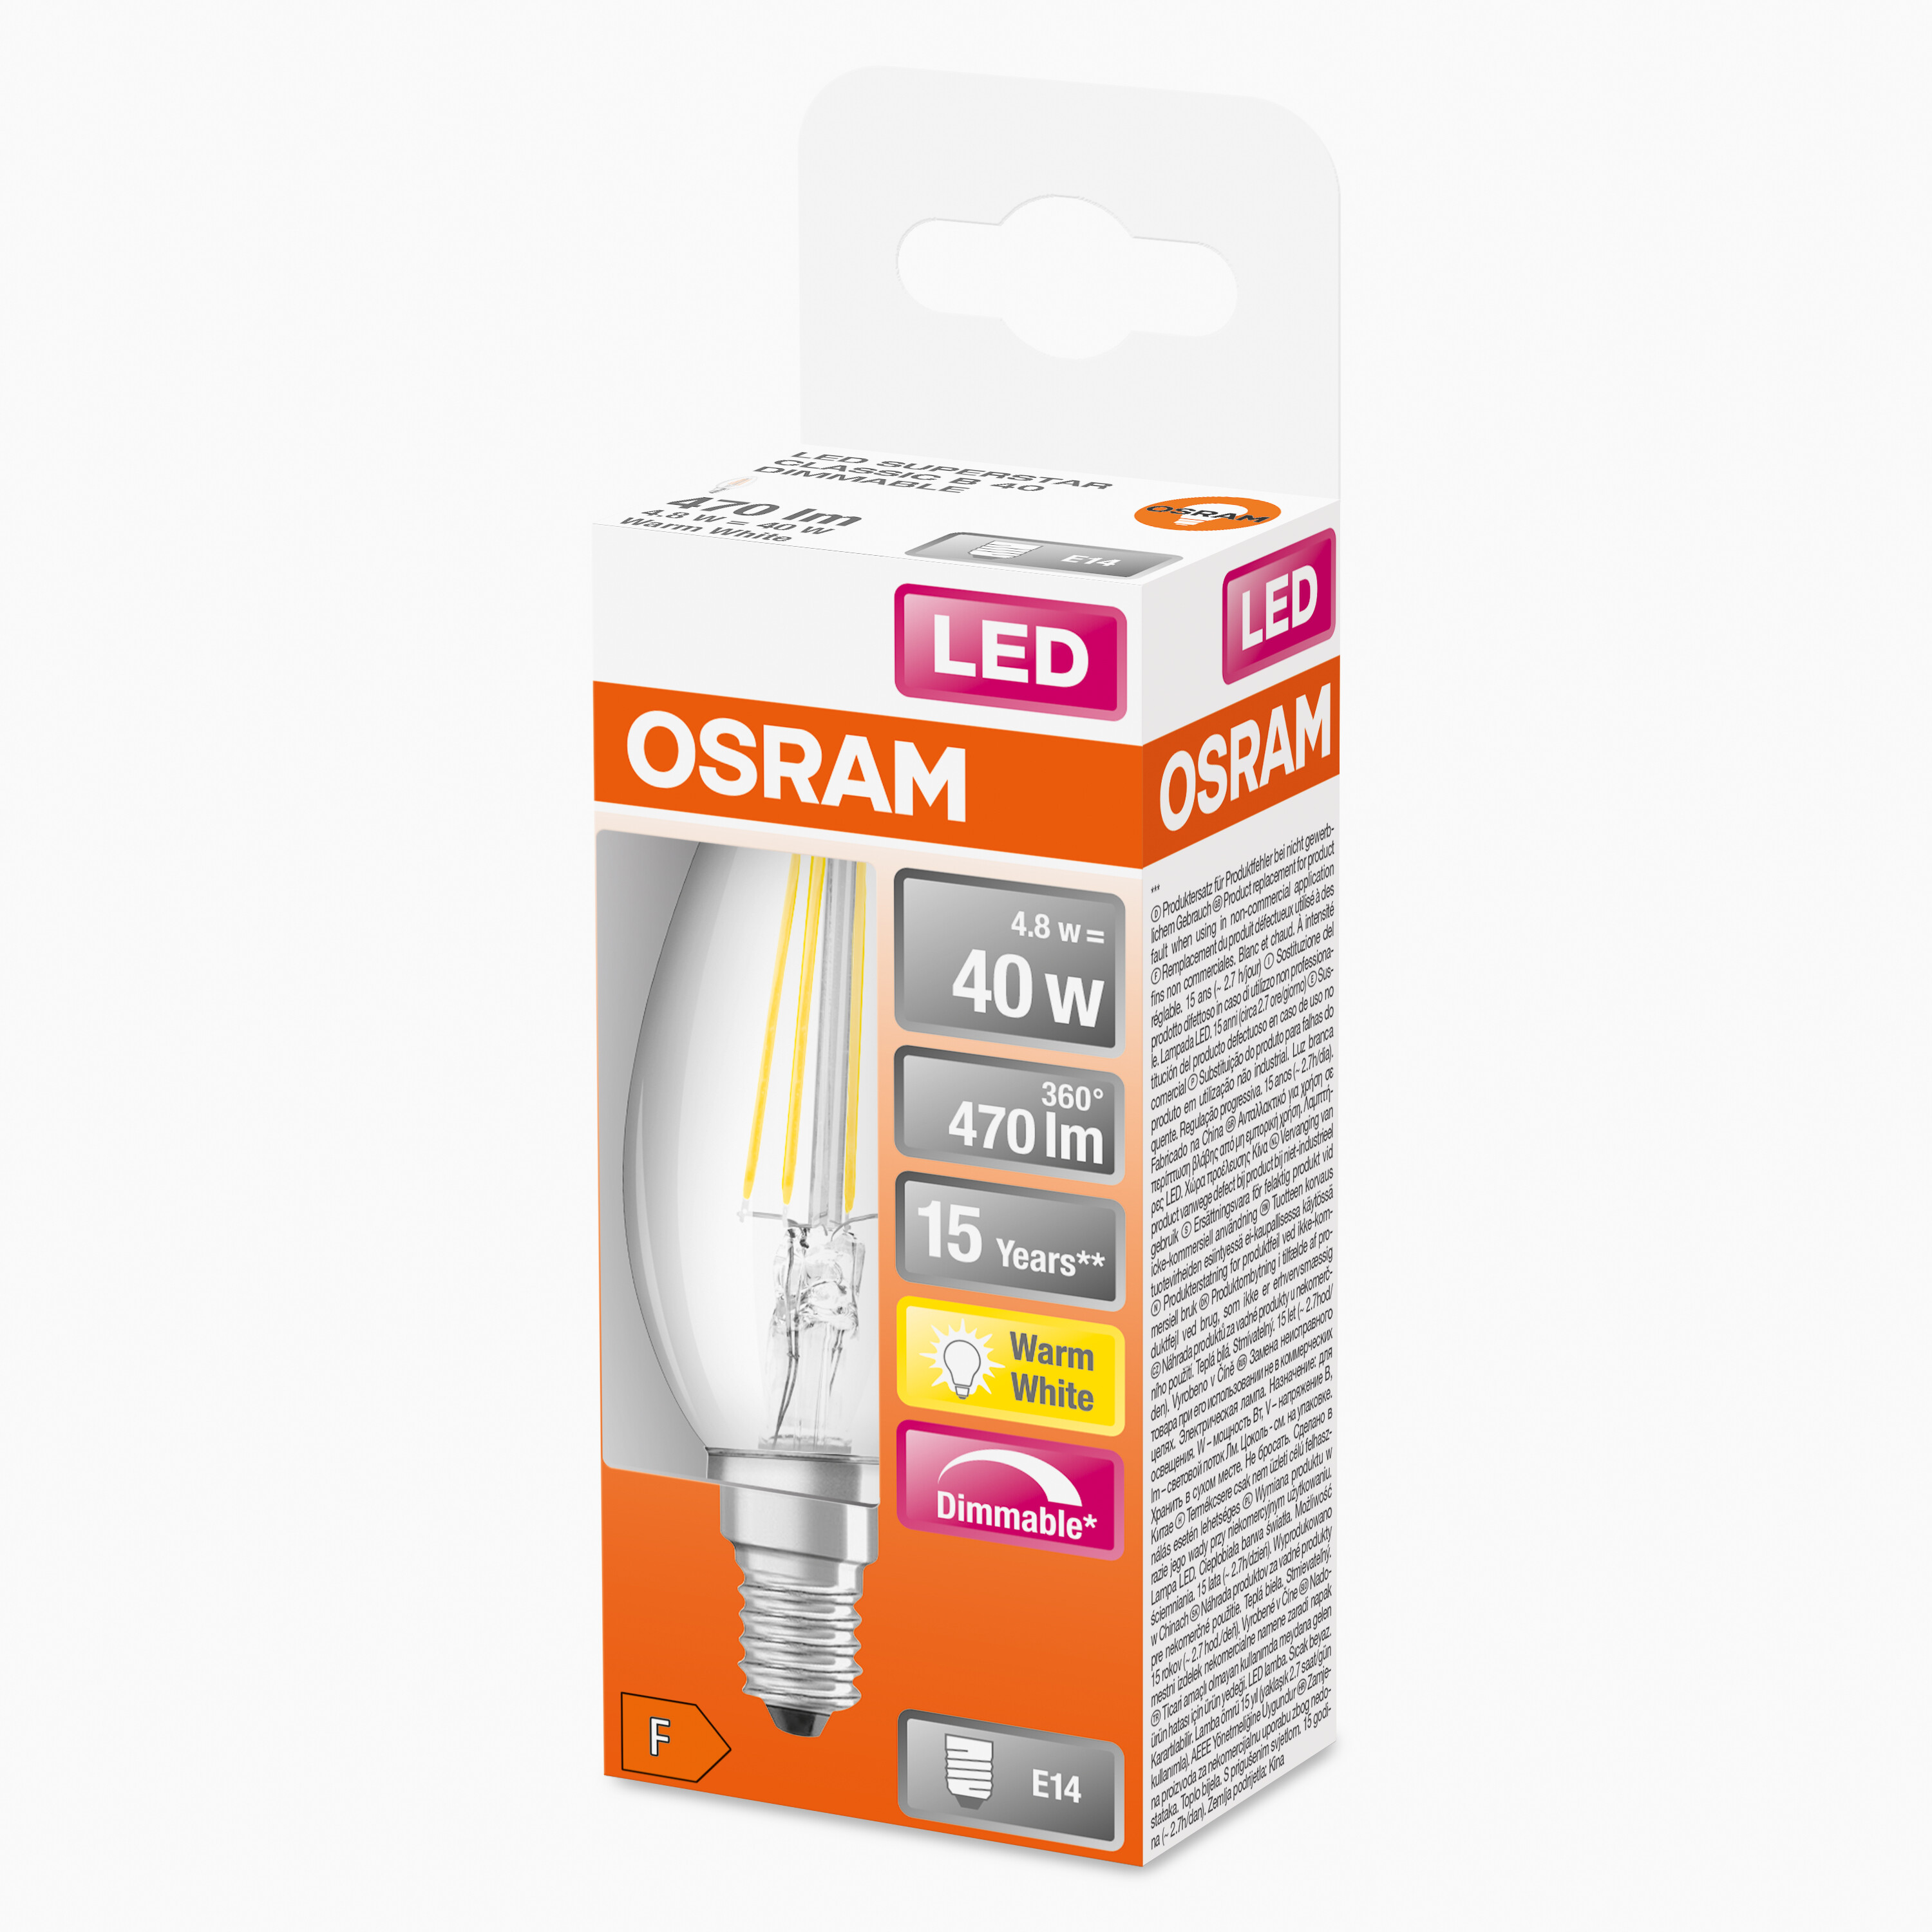 CLASSIC DIM LED Lampe B Retrofit 470 Lumen LED Warmweiß OSRAM 